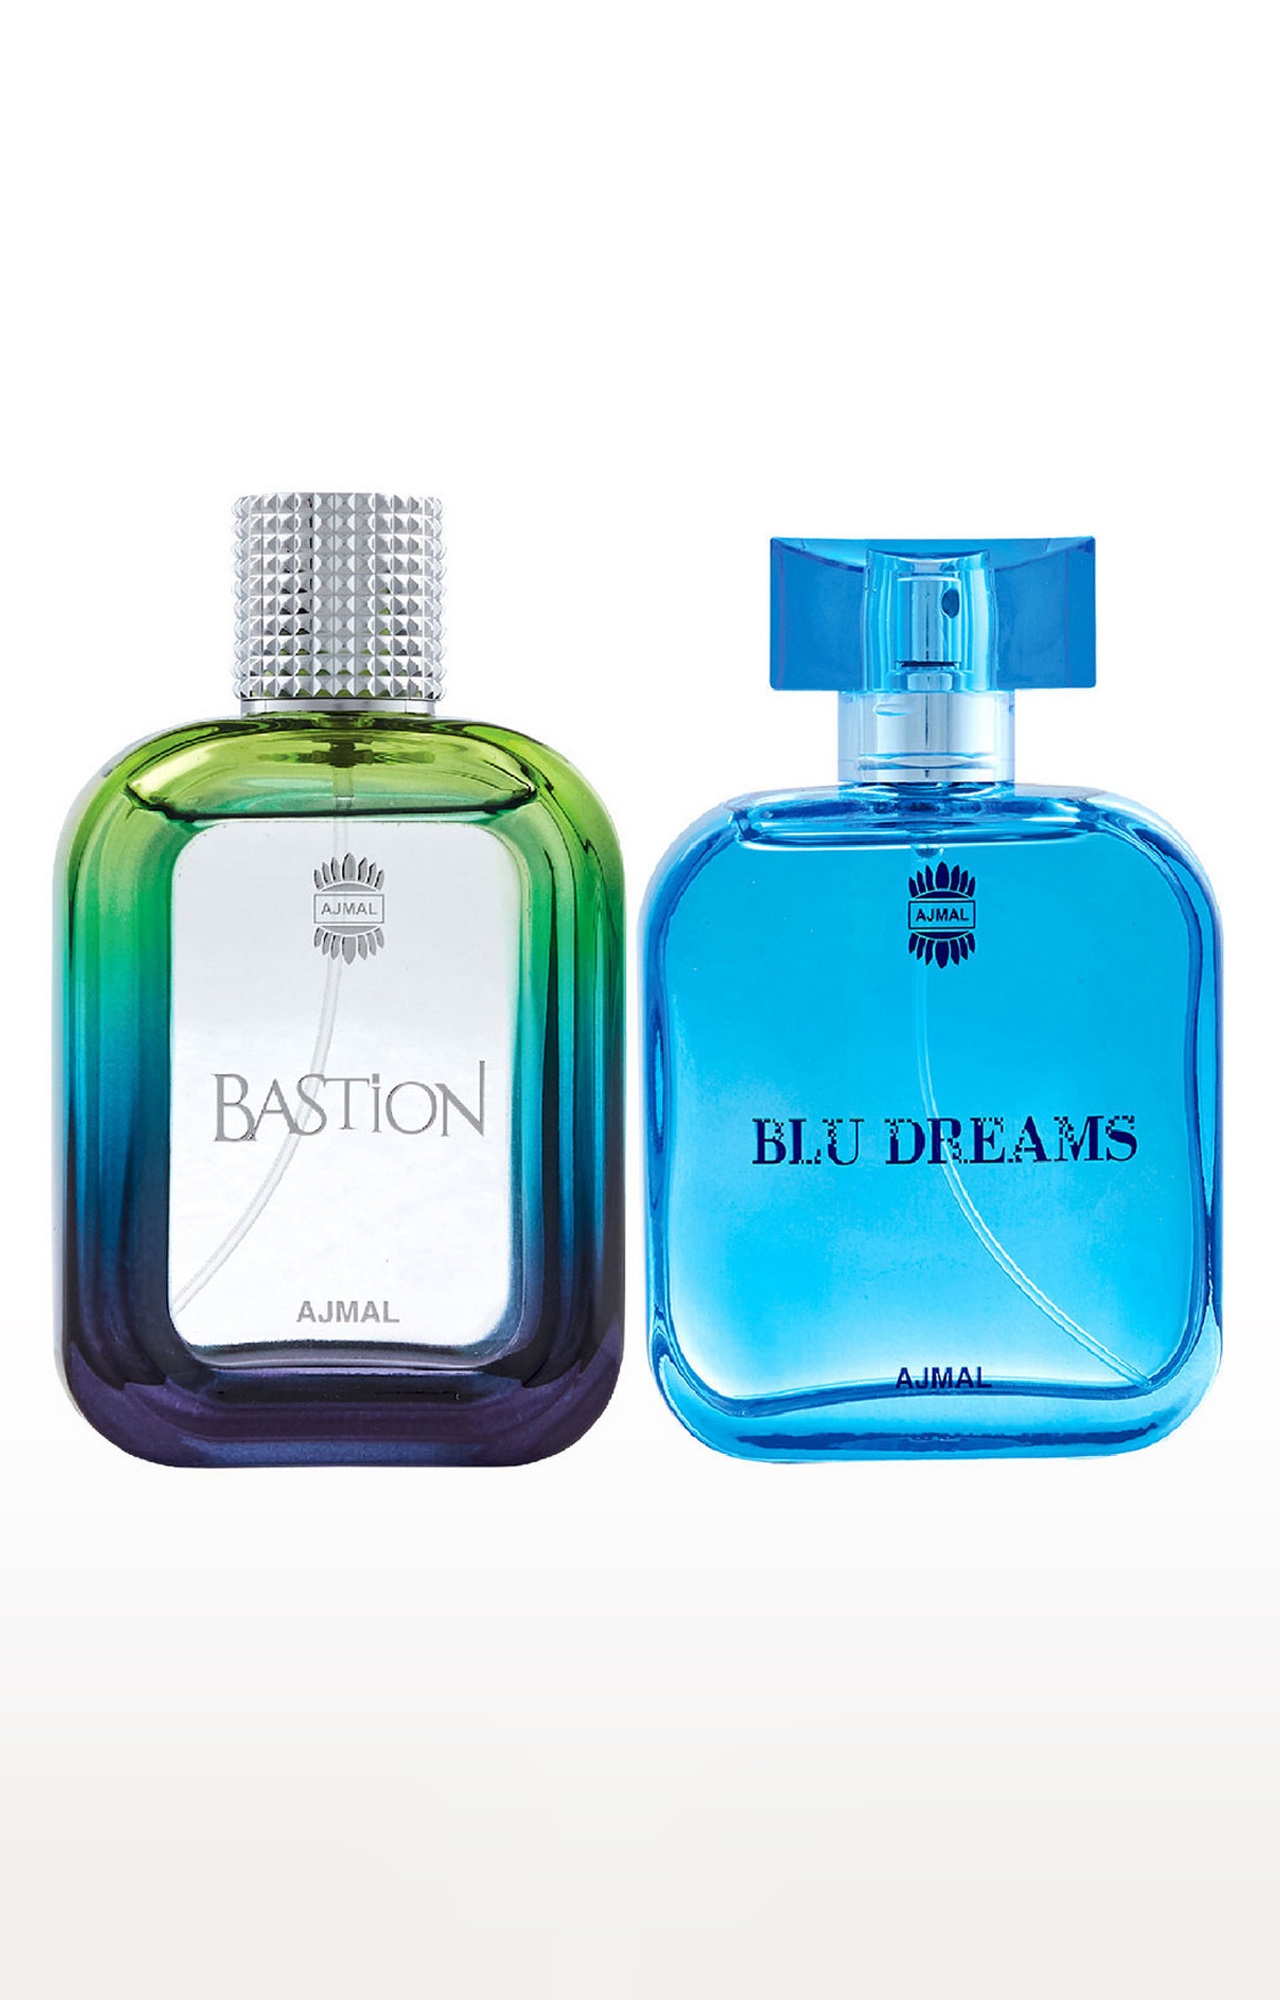 Ajmal Bastion EDP Perfume 100ml for Men and Blu Dreams EDP Citurs Fruity Perfume 100ml for Men FREE